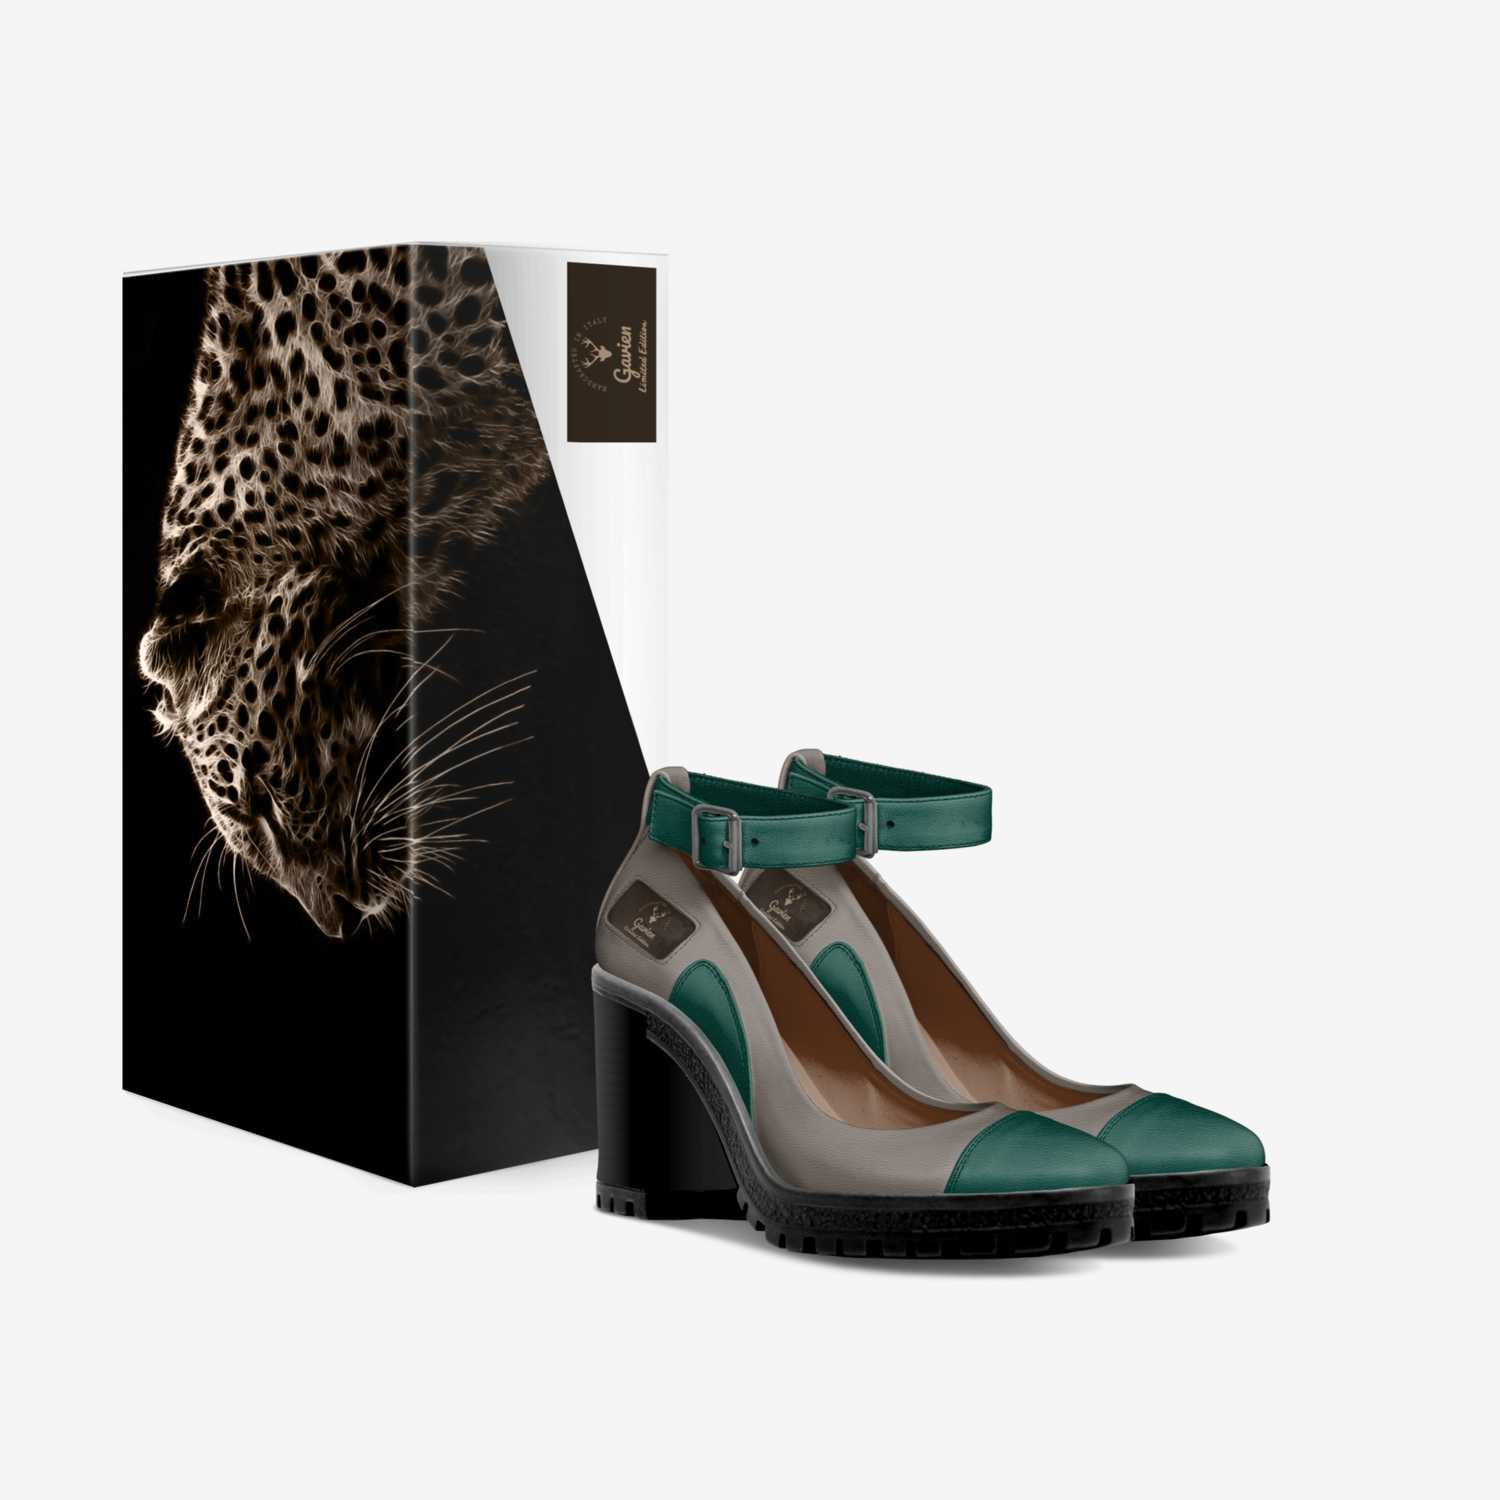 Gavien custom made in Italy shoes by Gavien Tiara | Box view